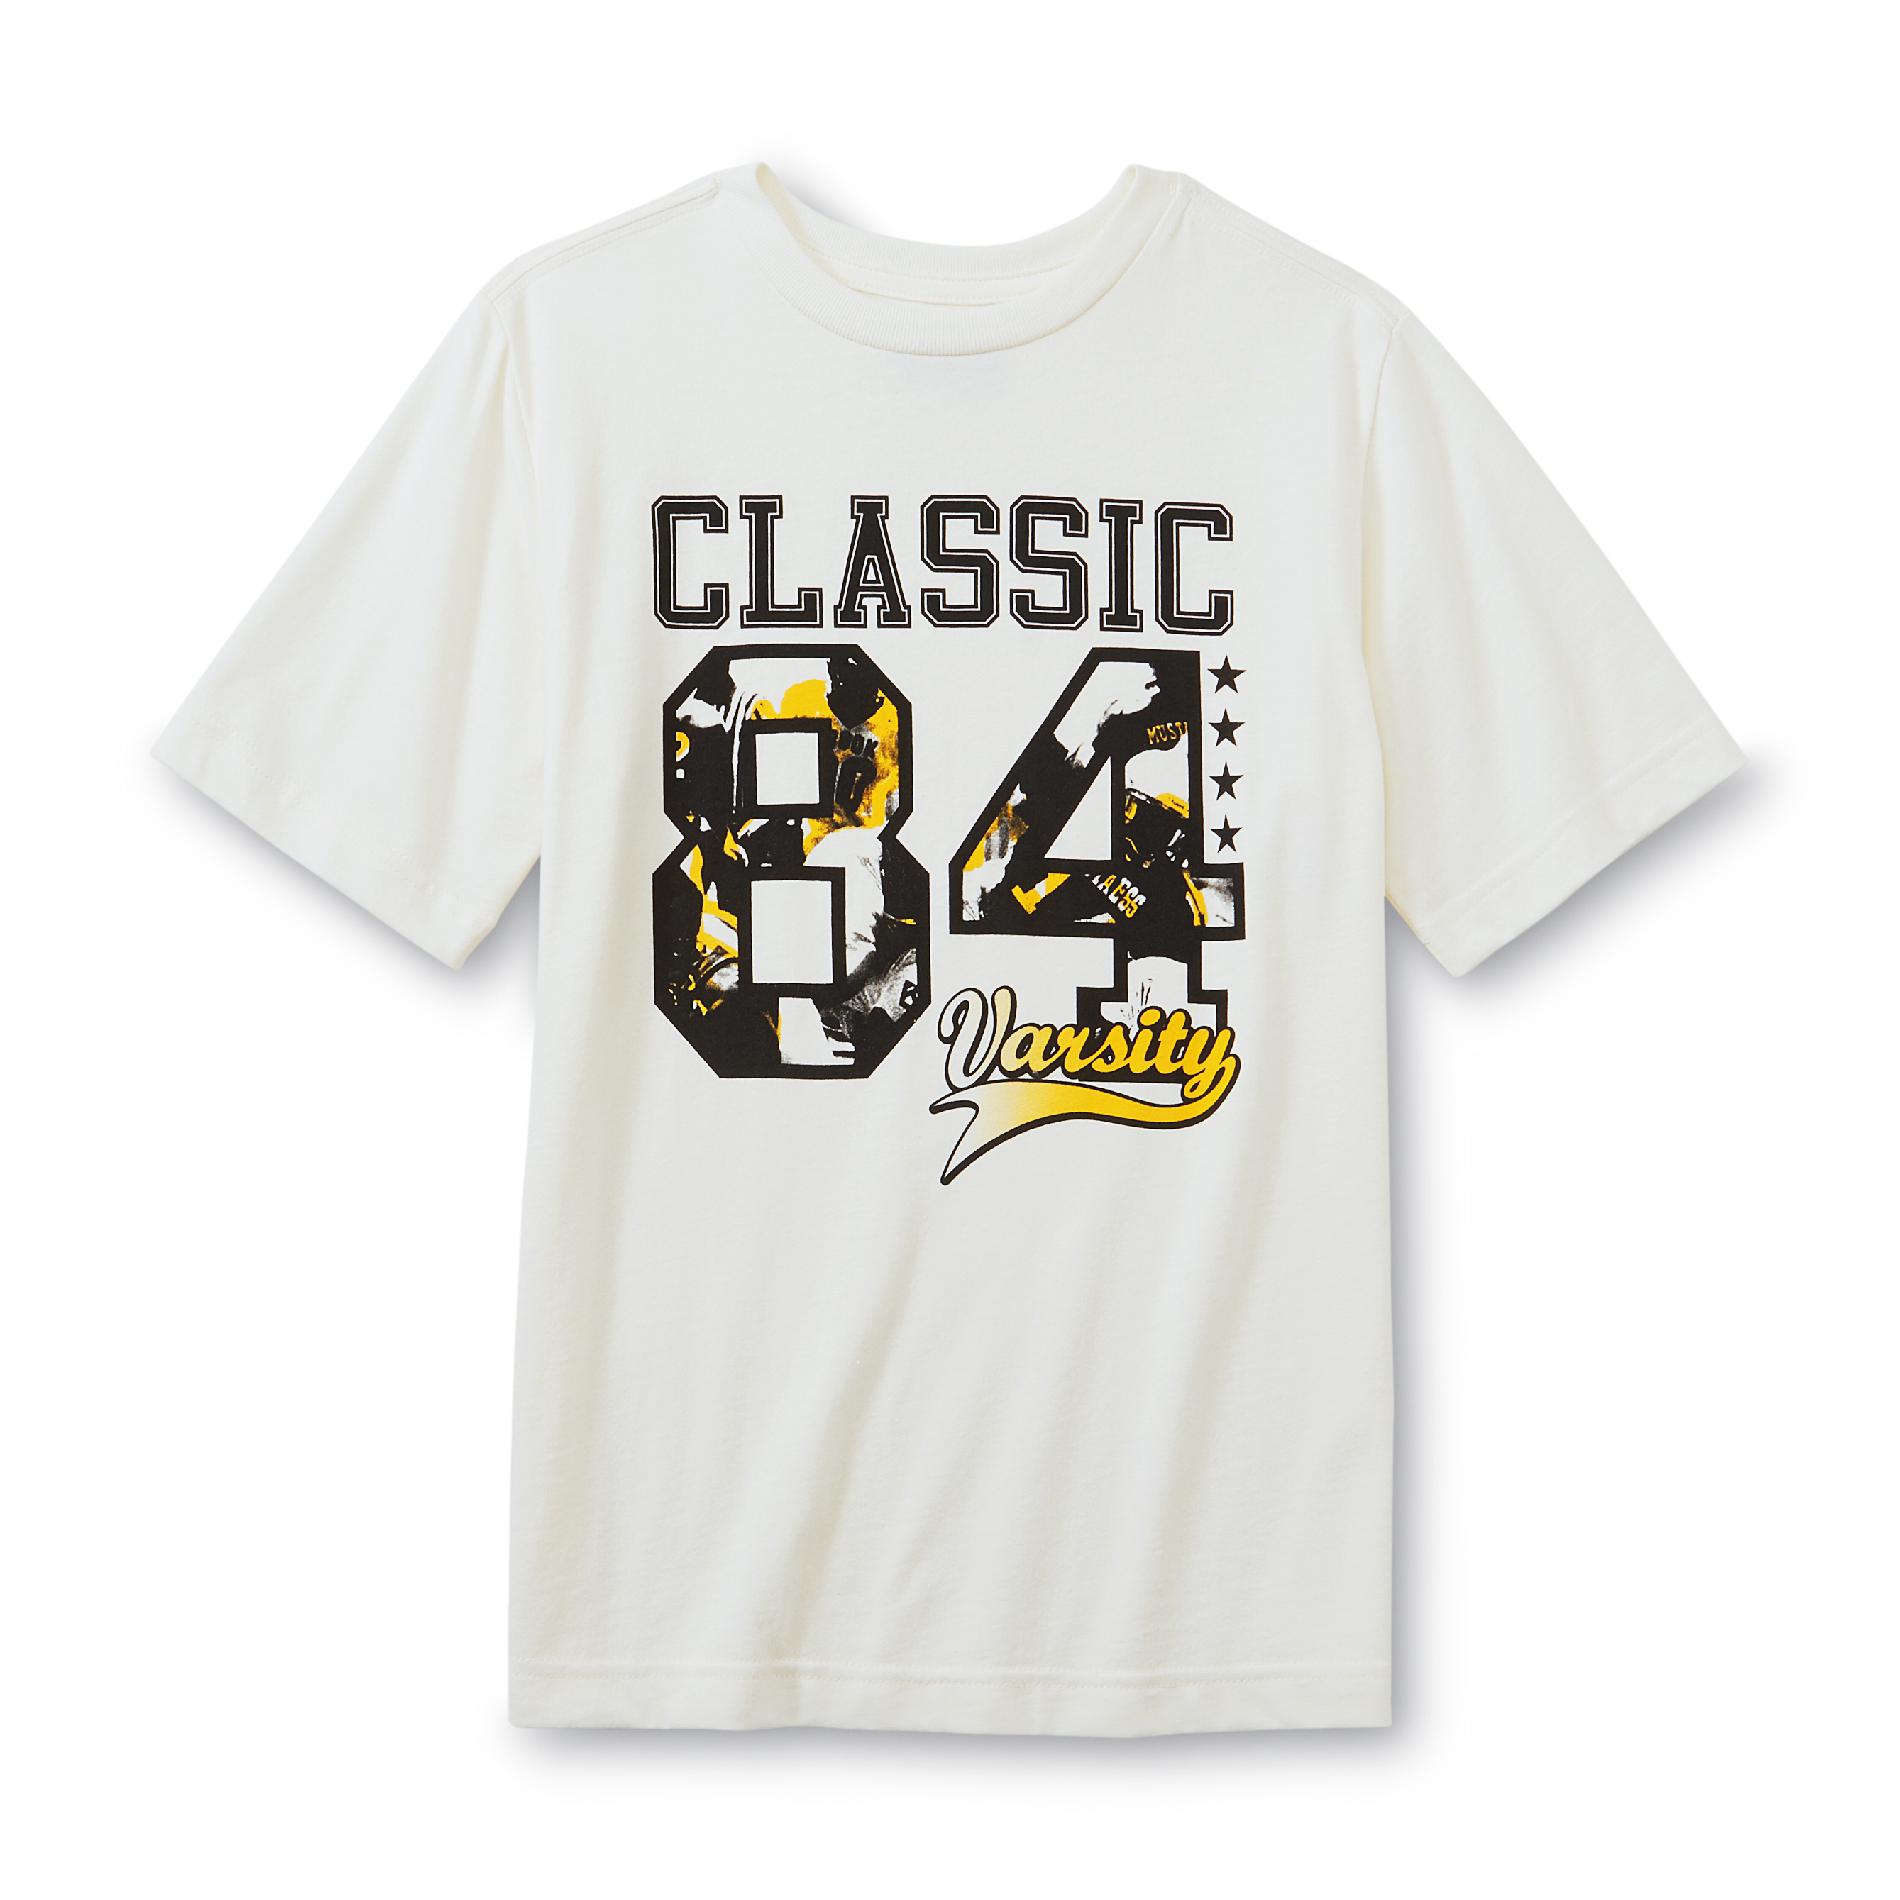 Basic Editions Boy's Graphic T-Shirt - Varsity Football